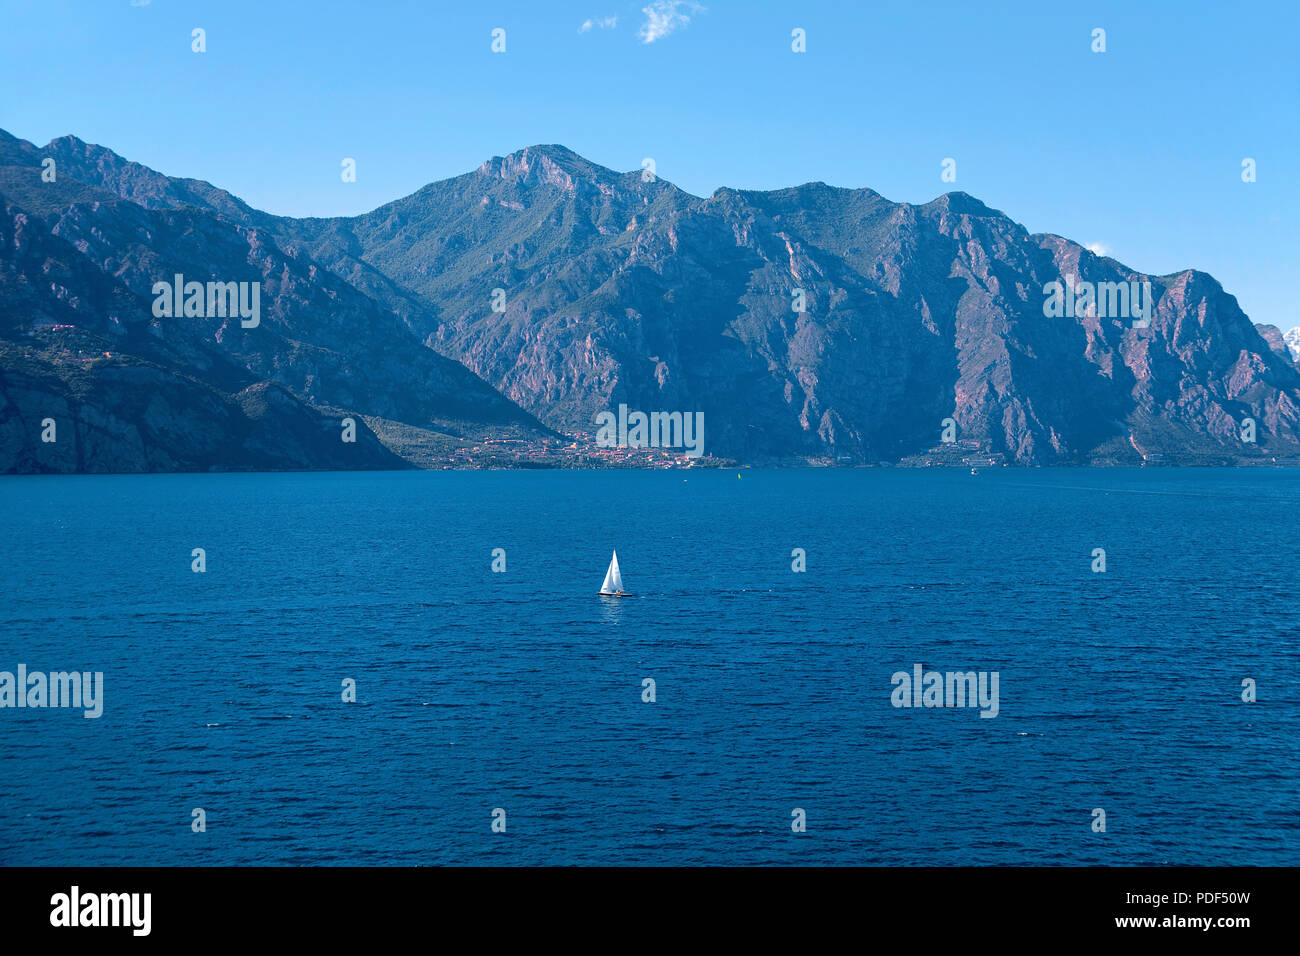 Sailing boat on Lake Garda at Malcesine, province Verona, Lake Garda, Lombardy, Italy, Europe Stock Photo